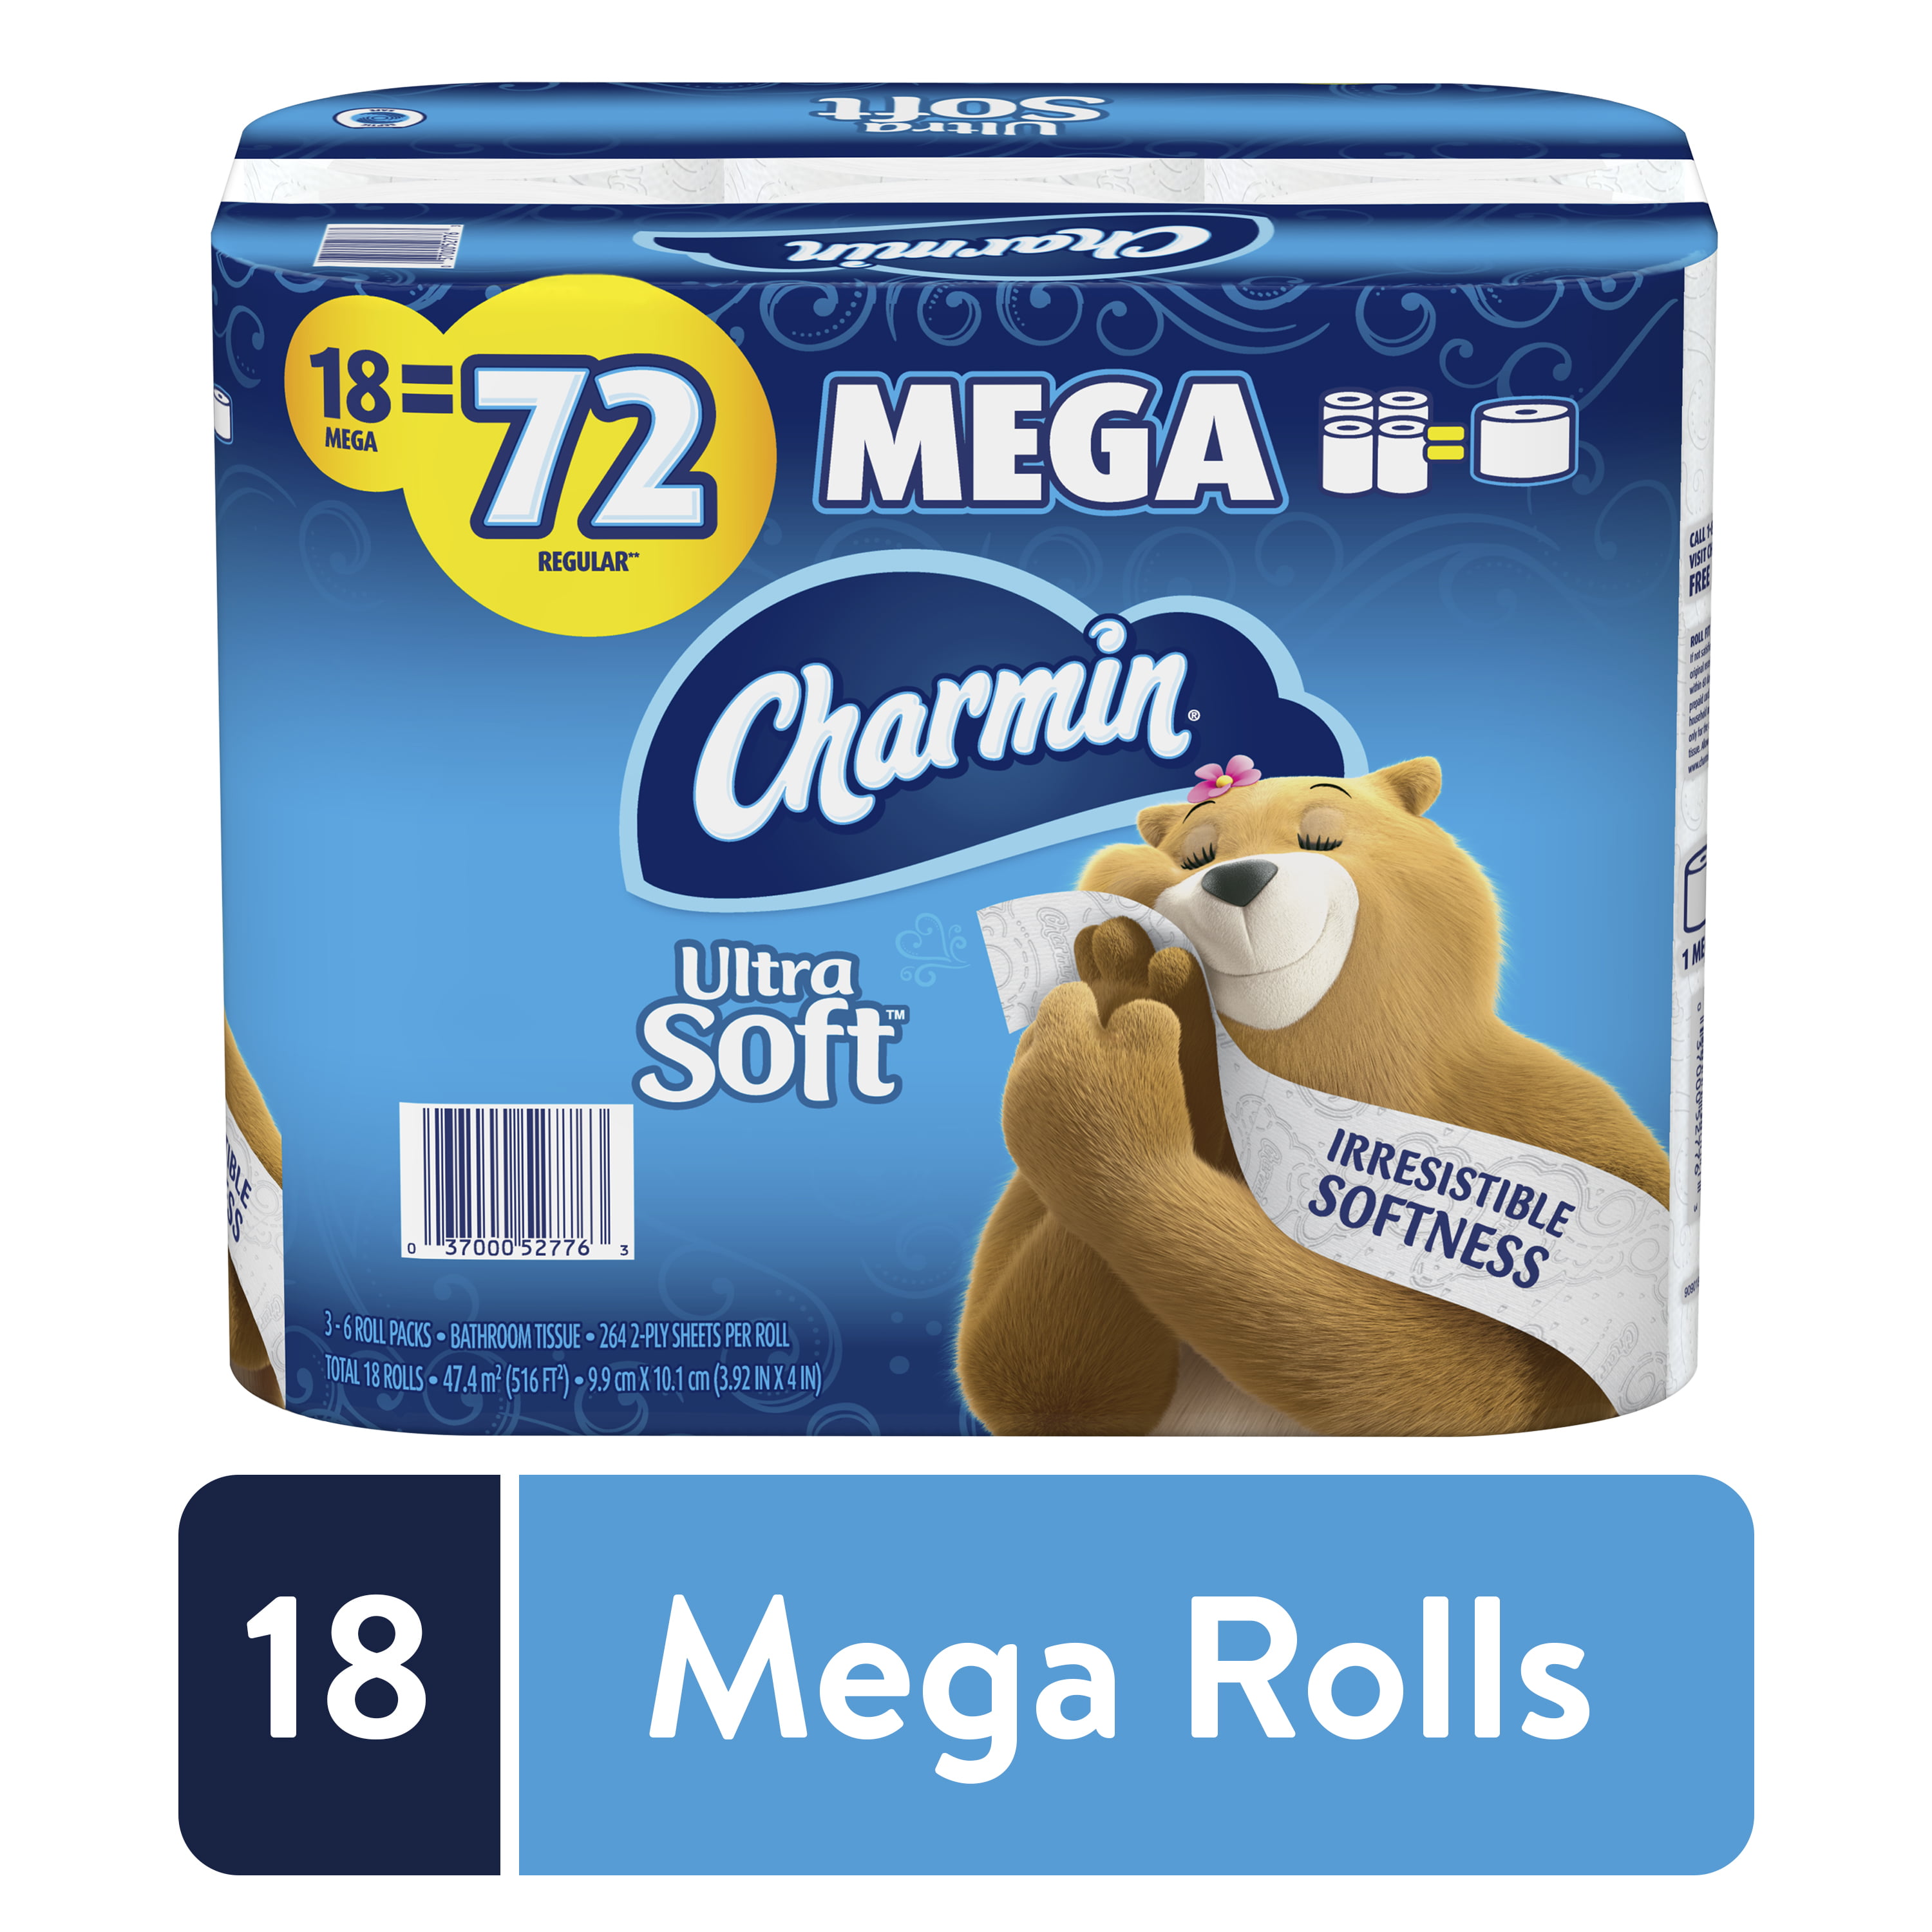 Details about   Charmin Ultra Soft Toilet Paper 12 Mega Rolls 264 sheets per roll 